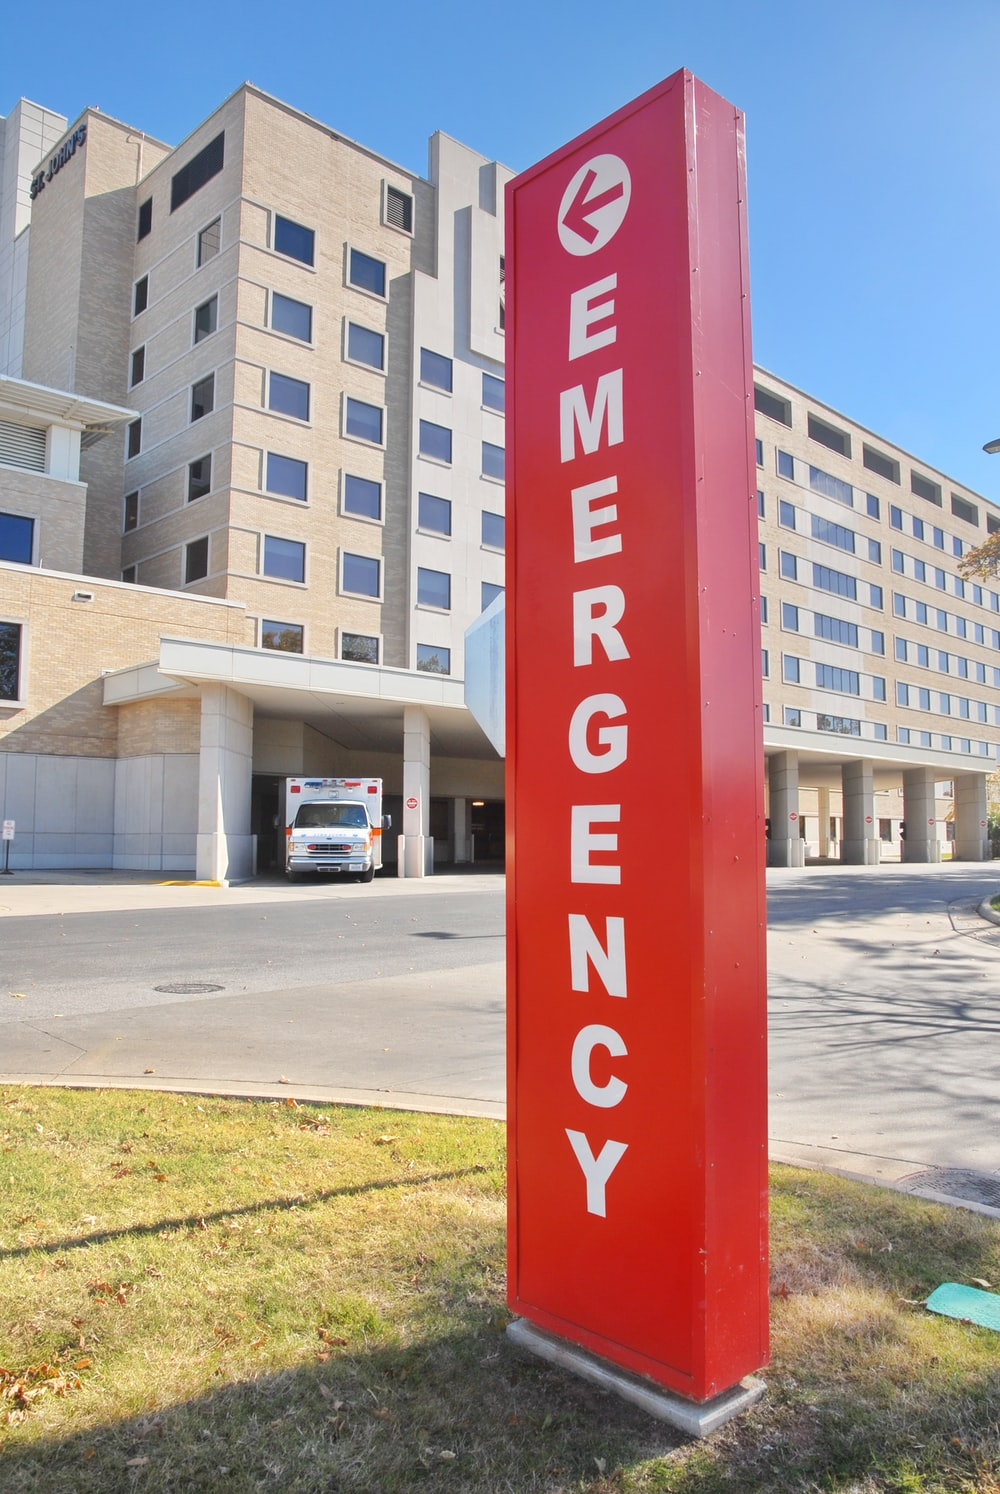 An ambulance parked near a hospital’s emergency sign